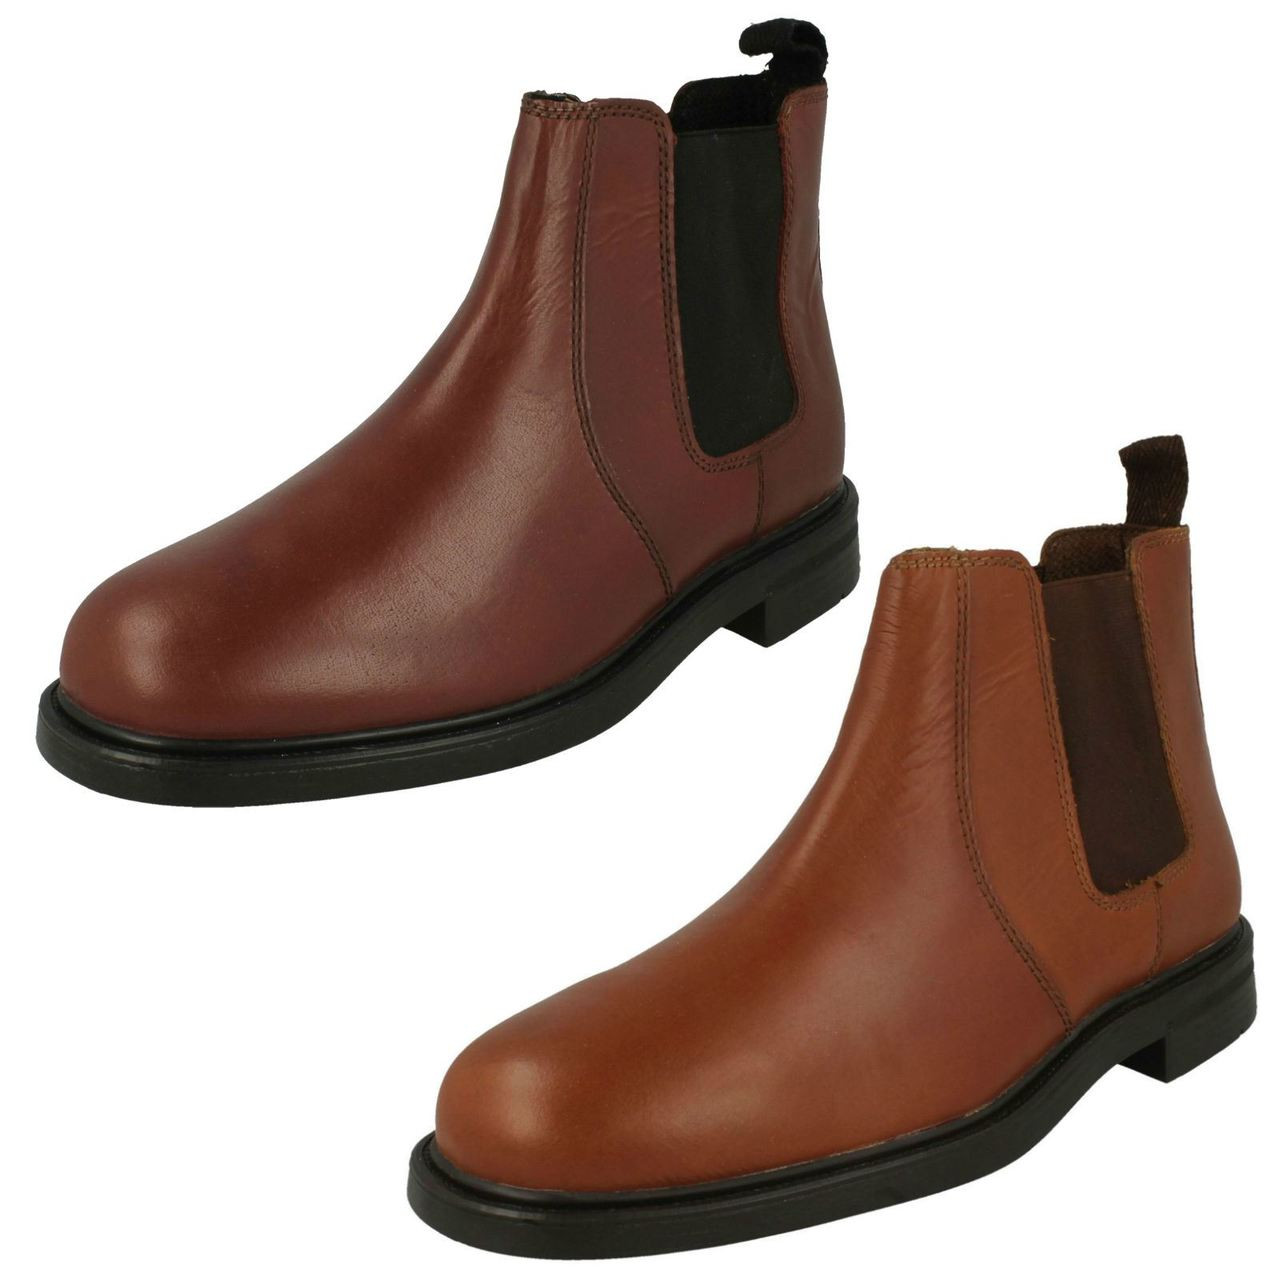 oaktrak boots